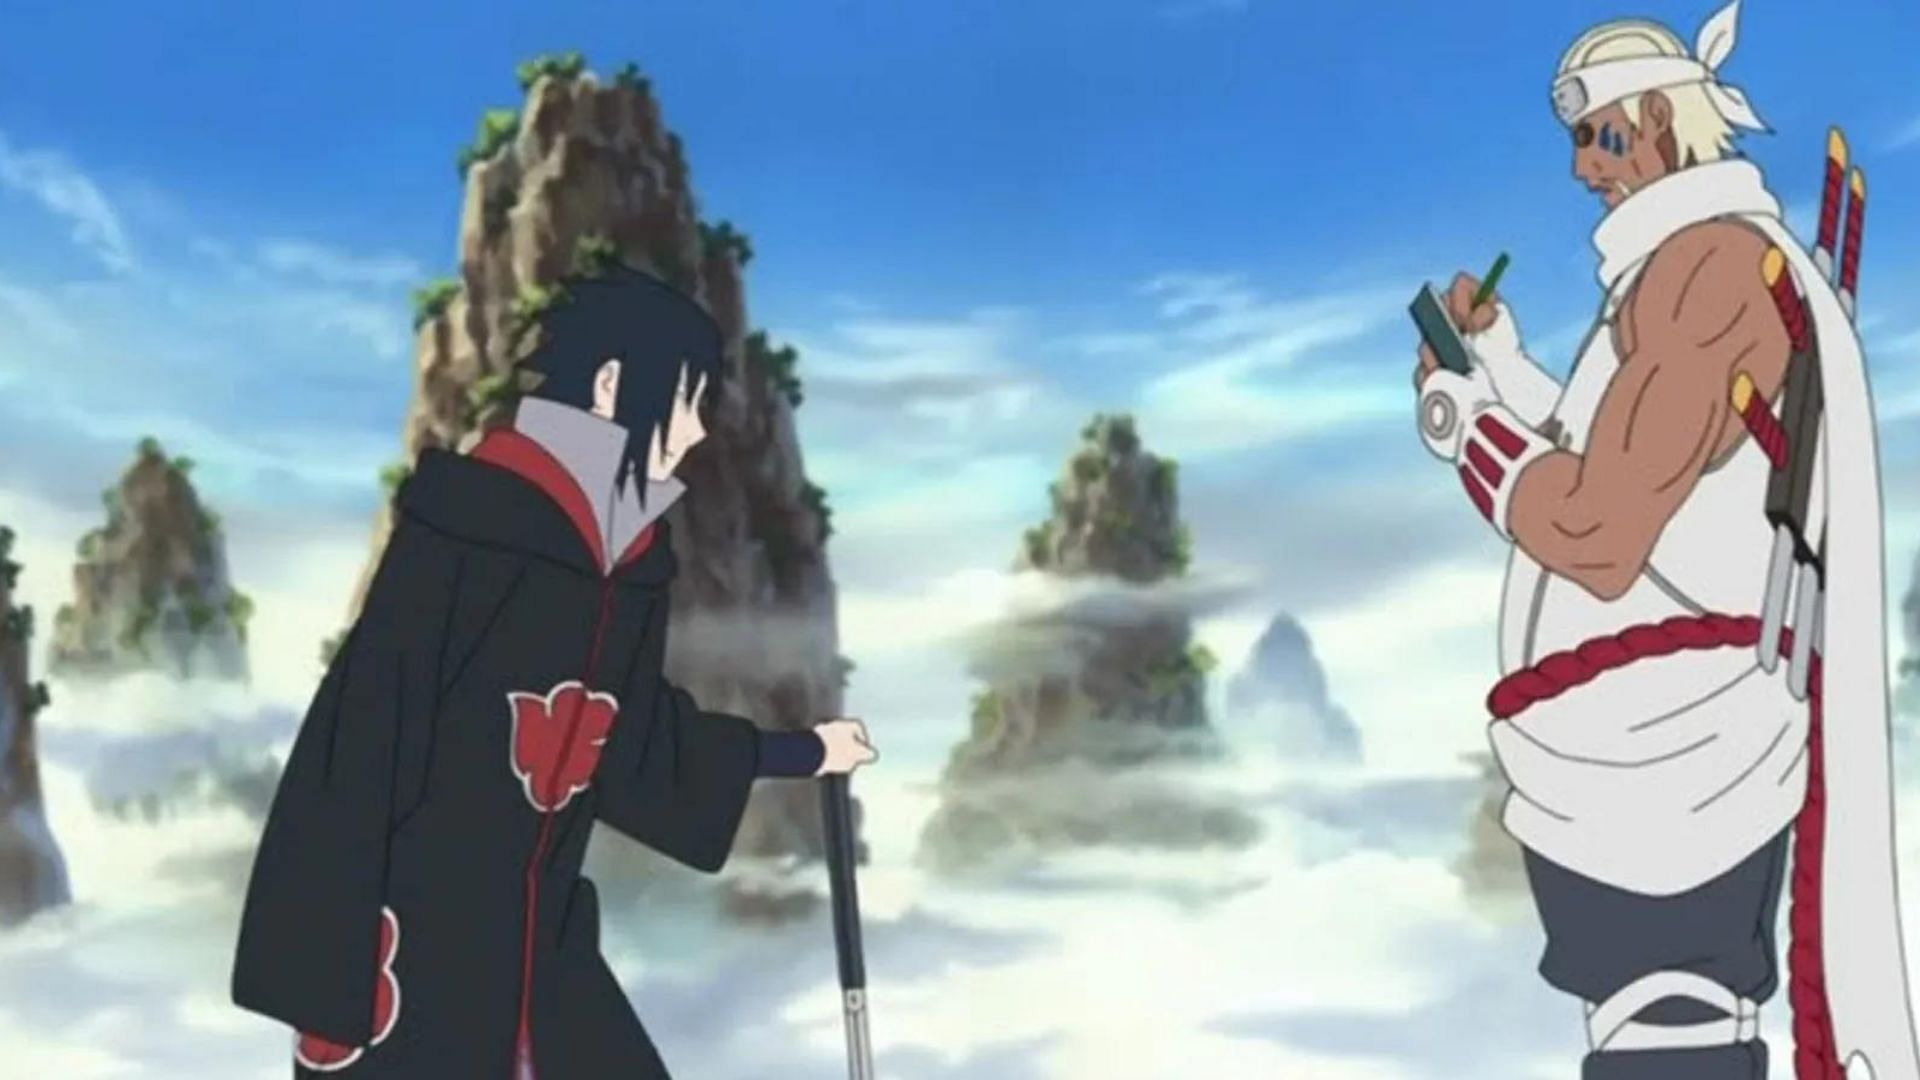 Sasuke Uchiha vs Killer B in Naruto Shippuden (Image via Studio Pierrot)